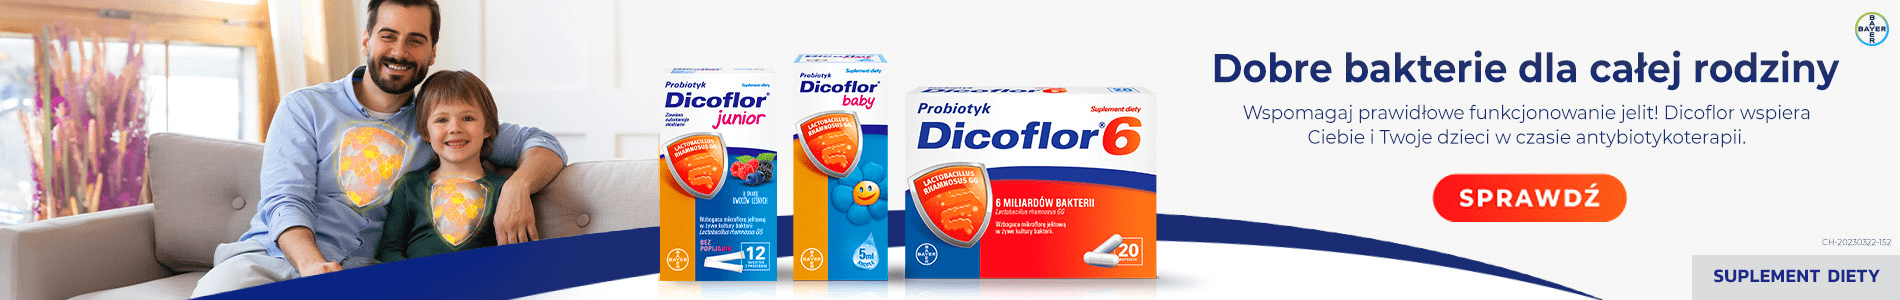 Dicoflor 